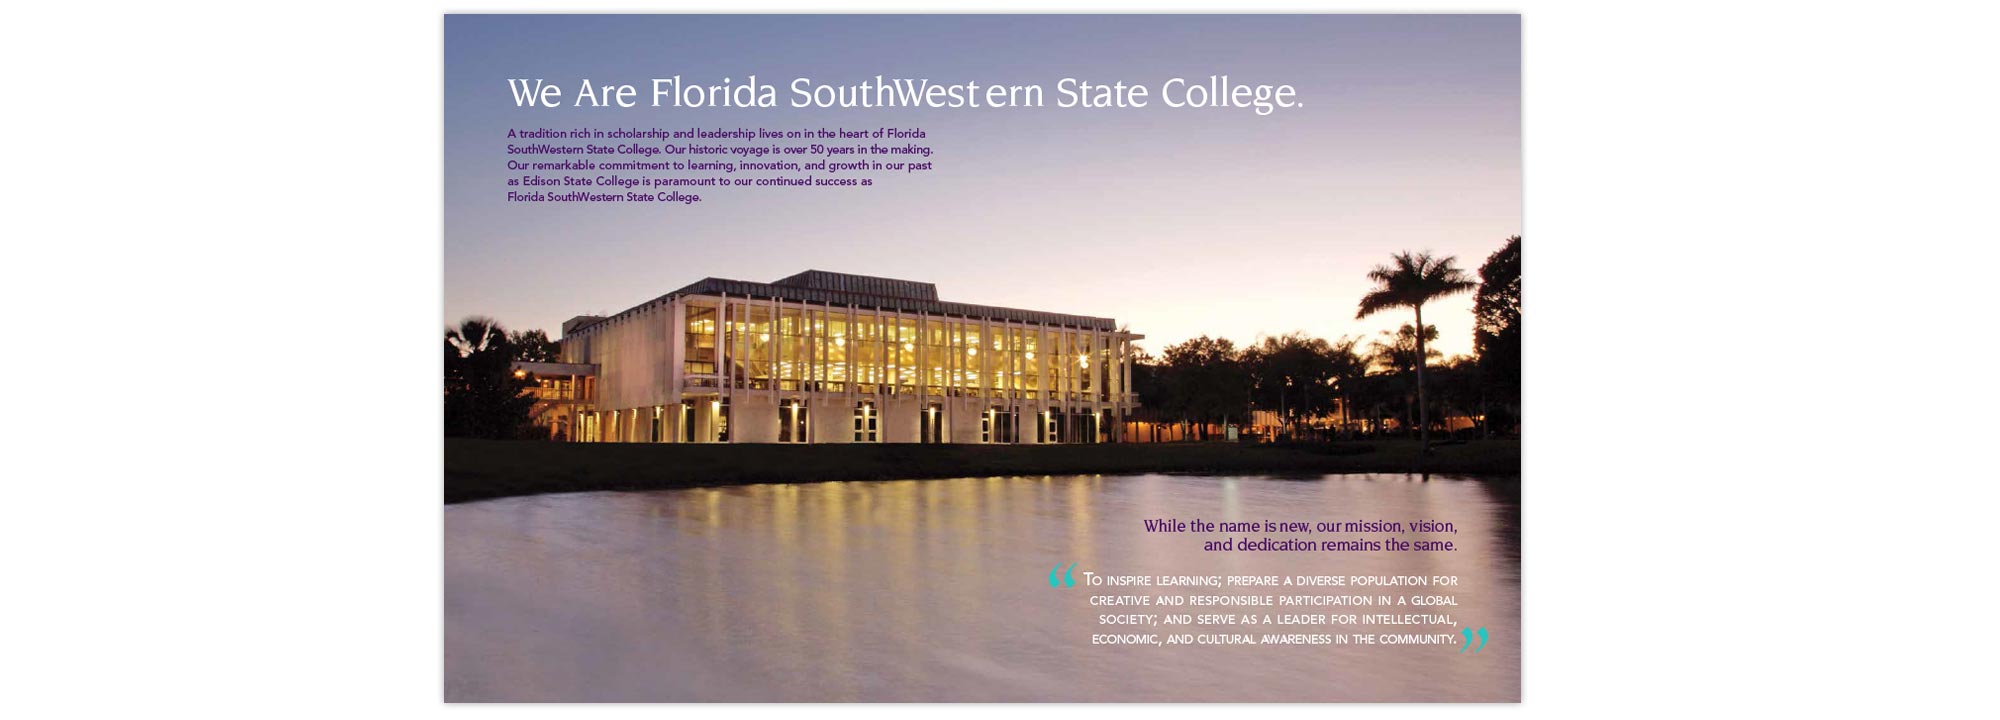 Florida Southwestern State College Ad